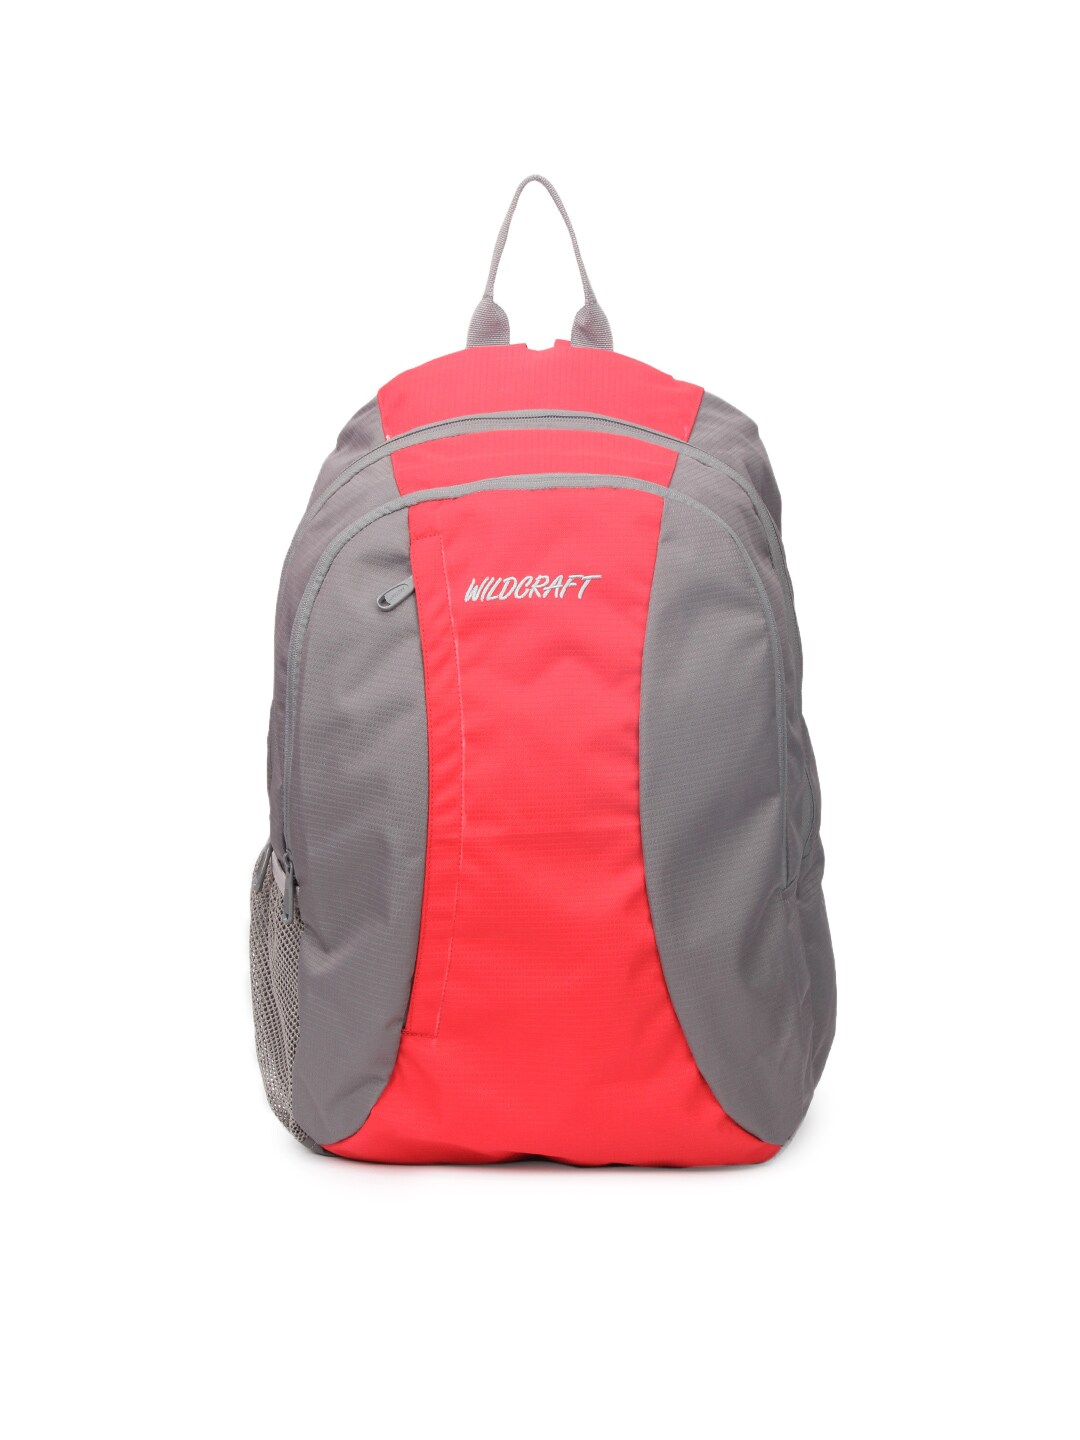 Wildcraft Unisex Red & Grey Backpack